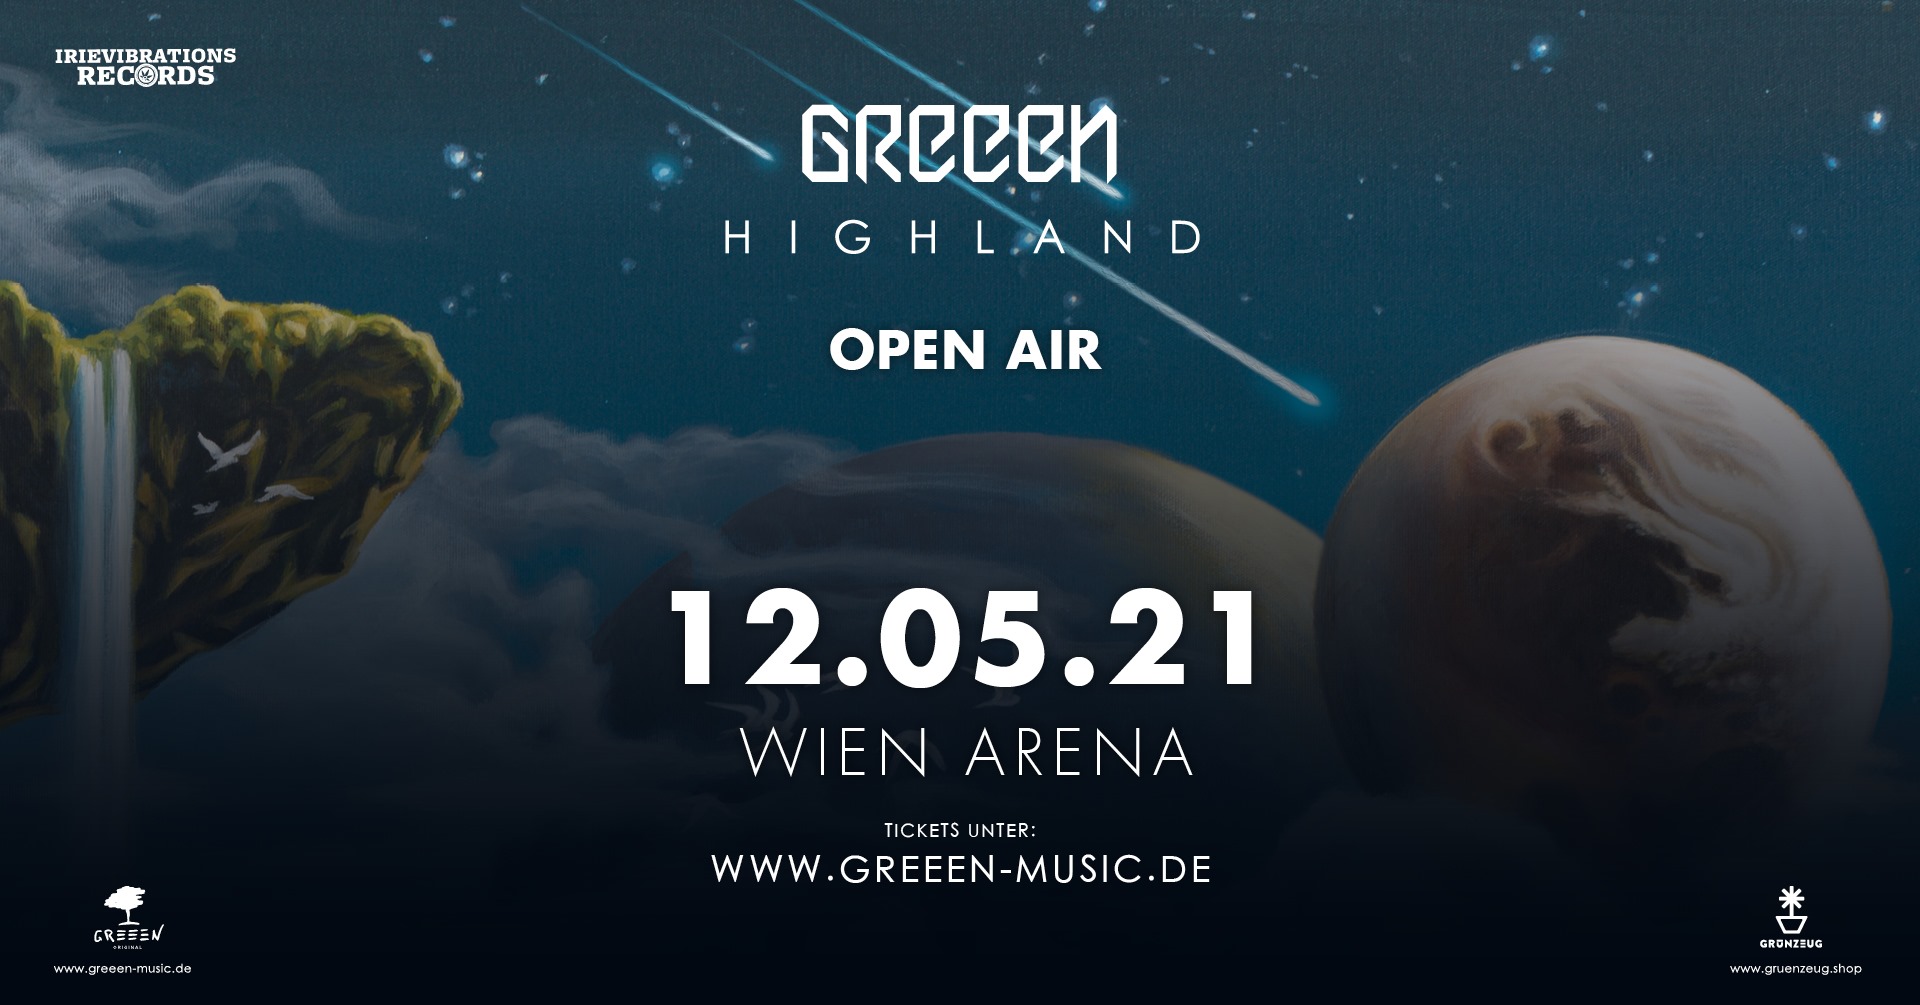 GReeeN am 12. May 2021 @ Arena Wien - Open Air.